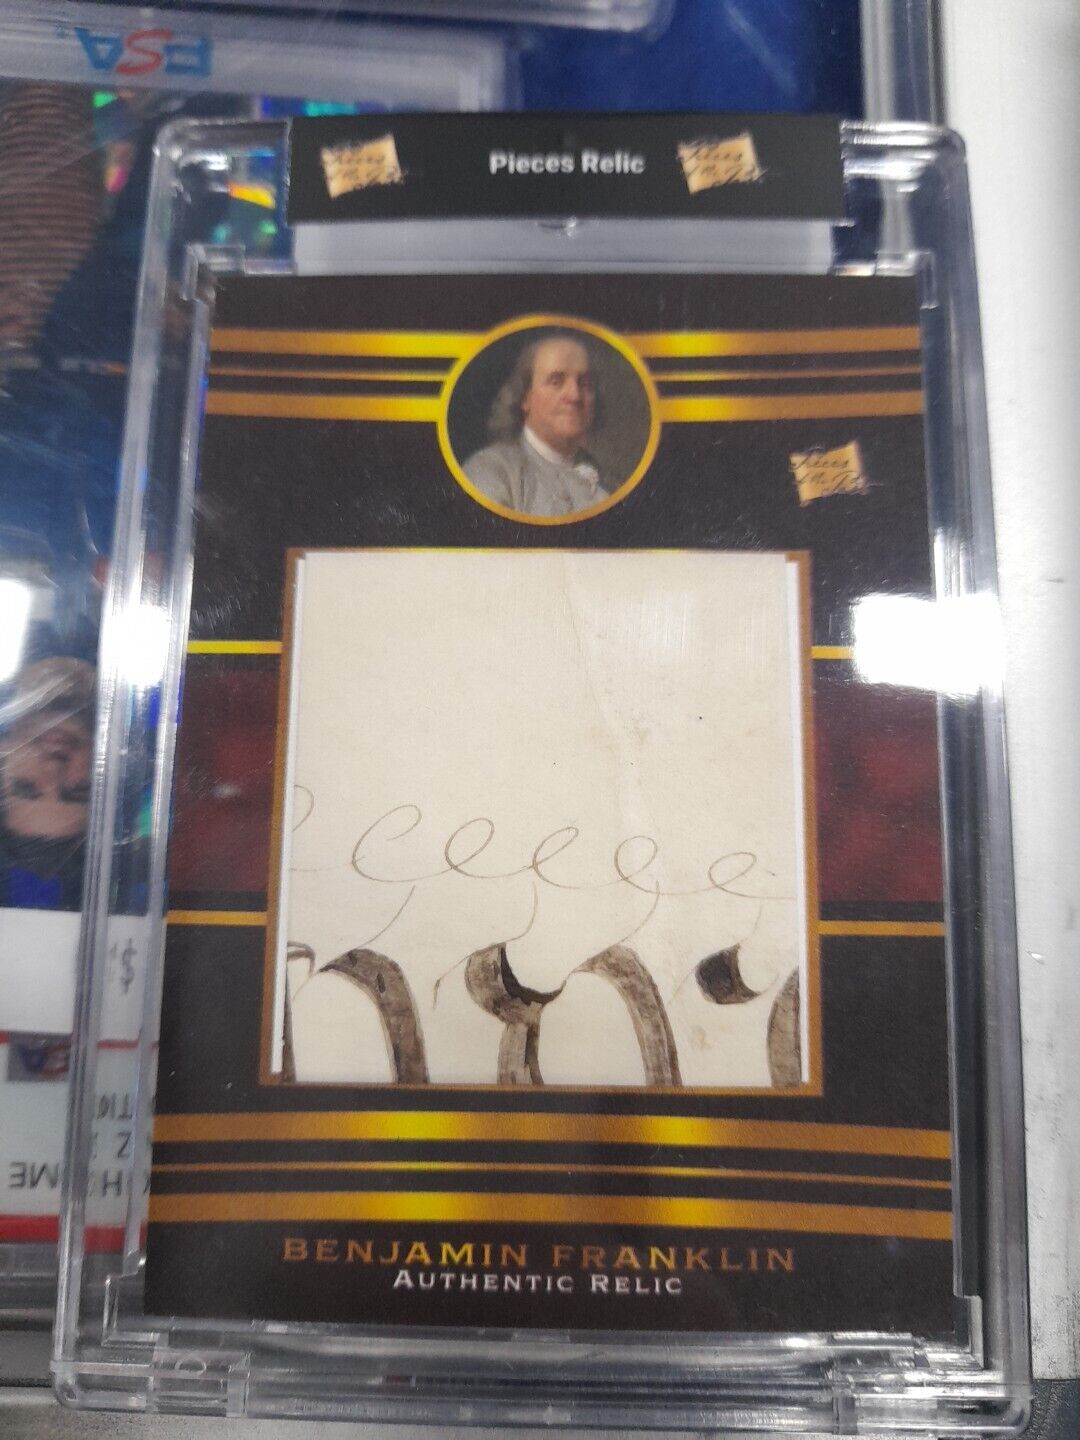 Ben Franklin Pieces of the Past 2022 Founders Edition Jumbo Handwritten Relic